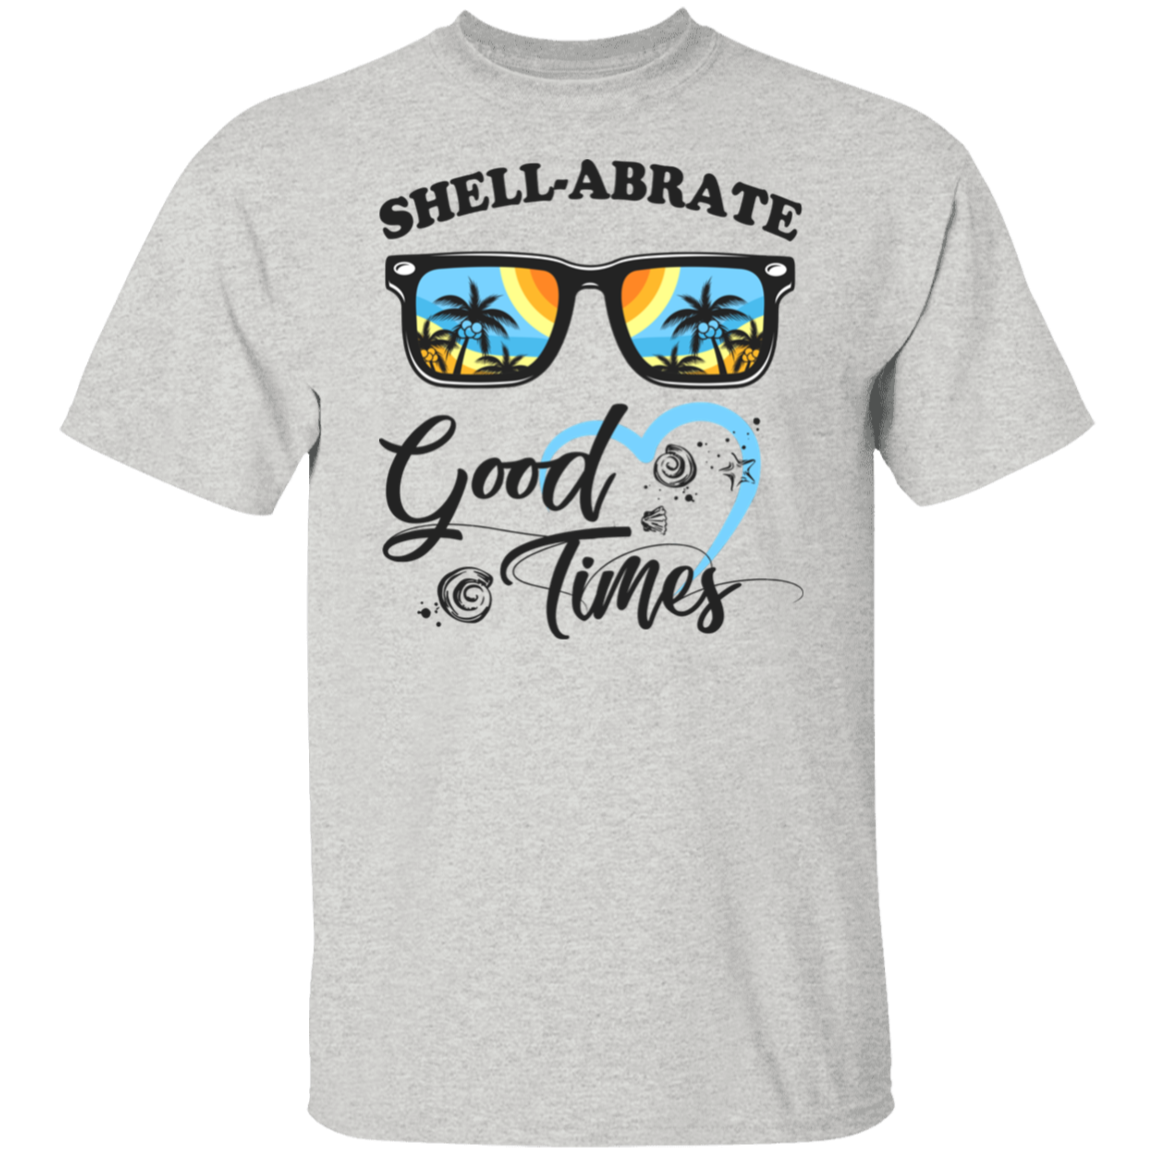 Shell-Abrate Good Times T-Shirt